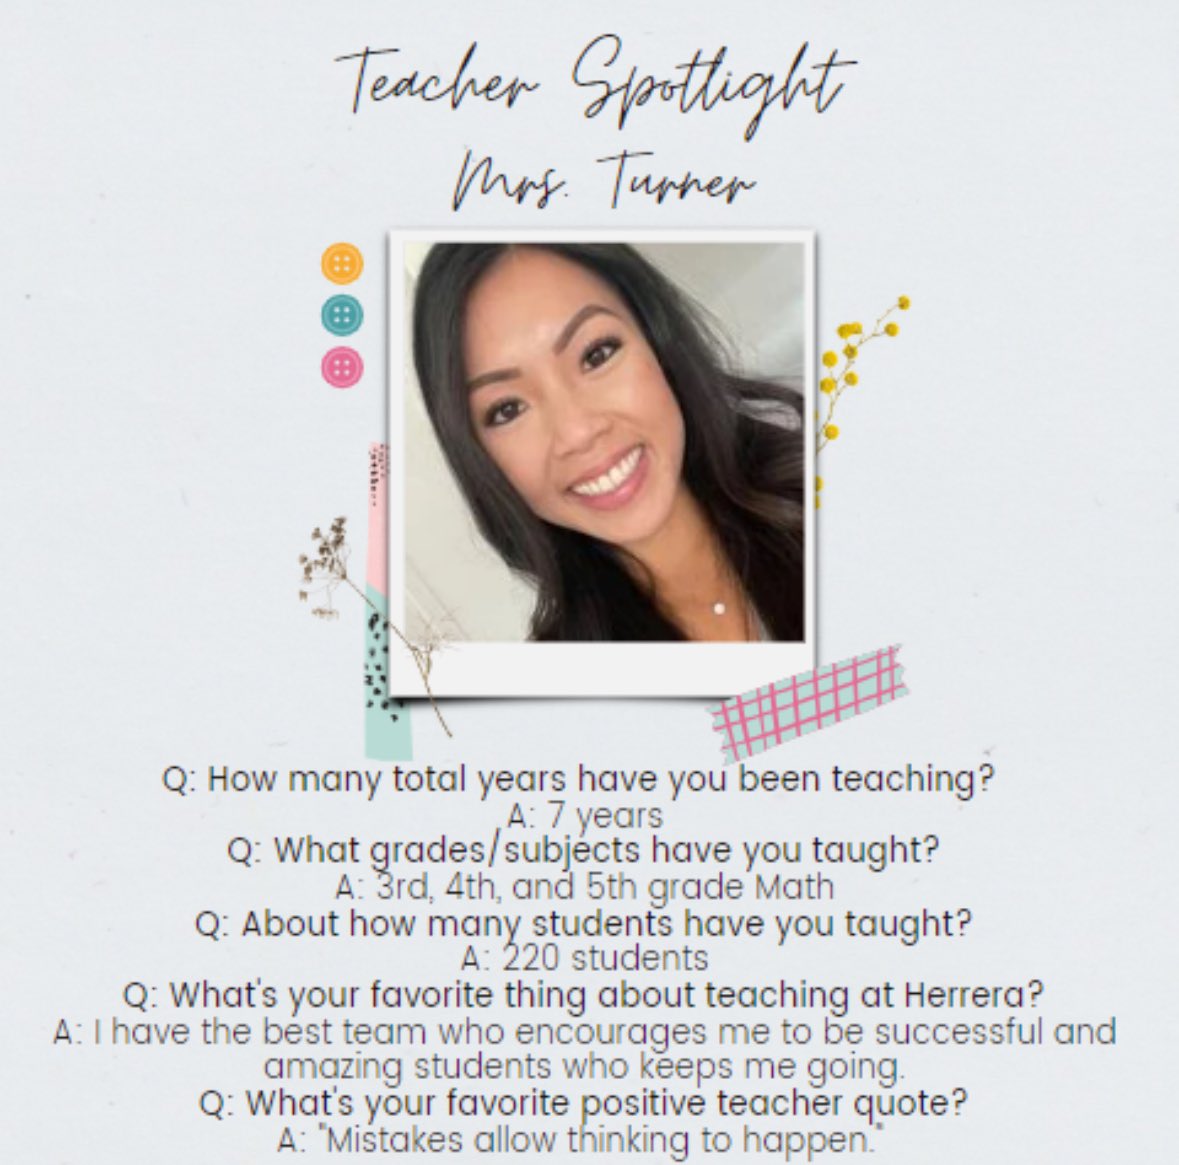 Teacher Spotlight #3: Mrs. Turner🐾
@HoustonISD @TeamHISD 
#TAW #HerrerHuskies #ThankHISDTeachers